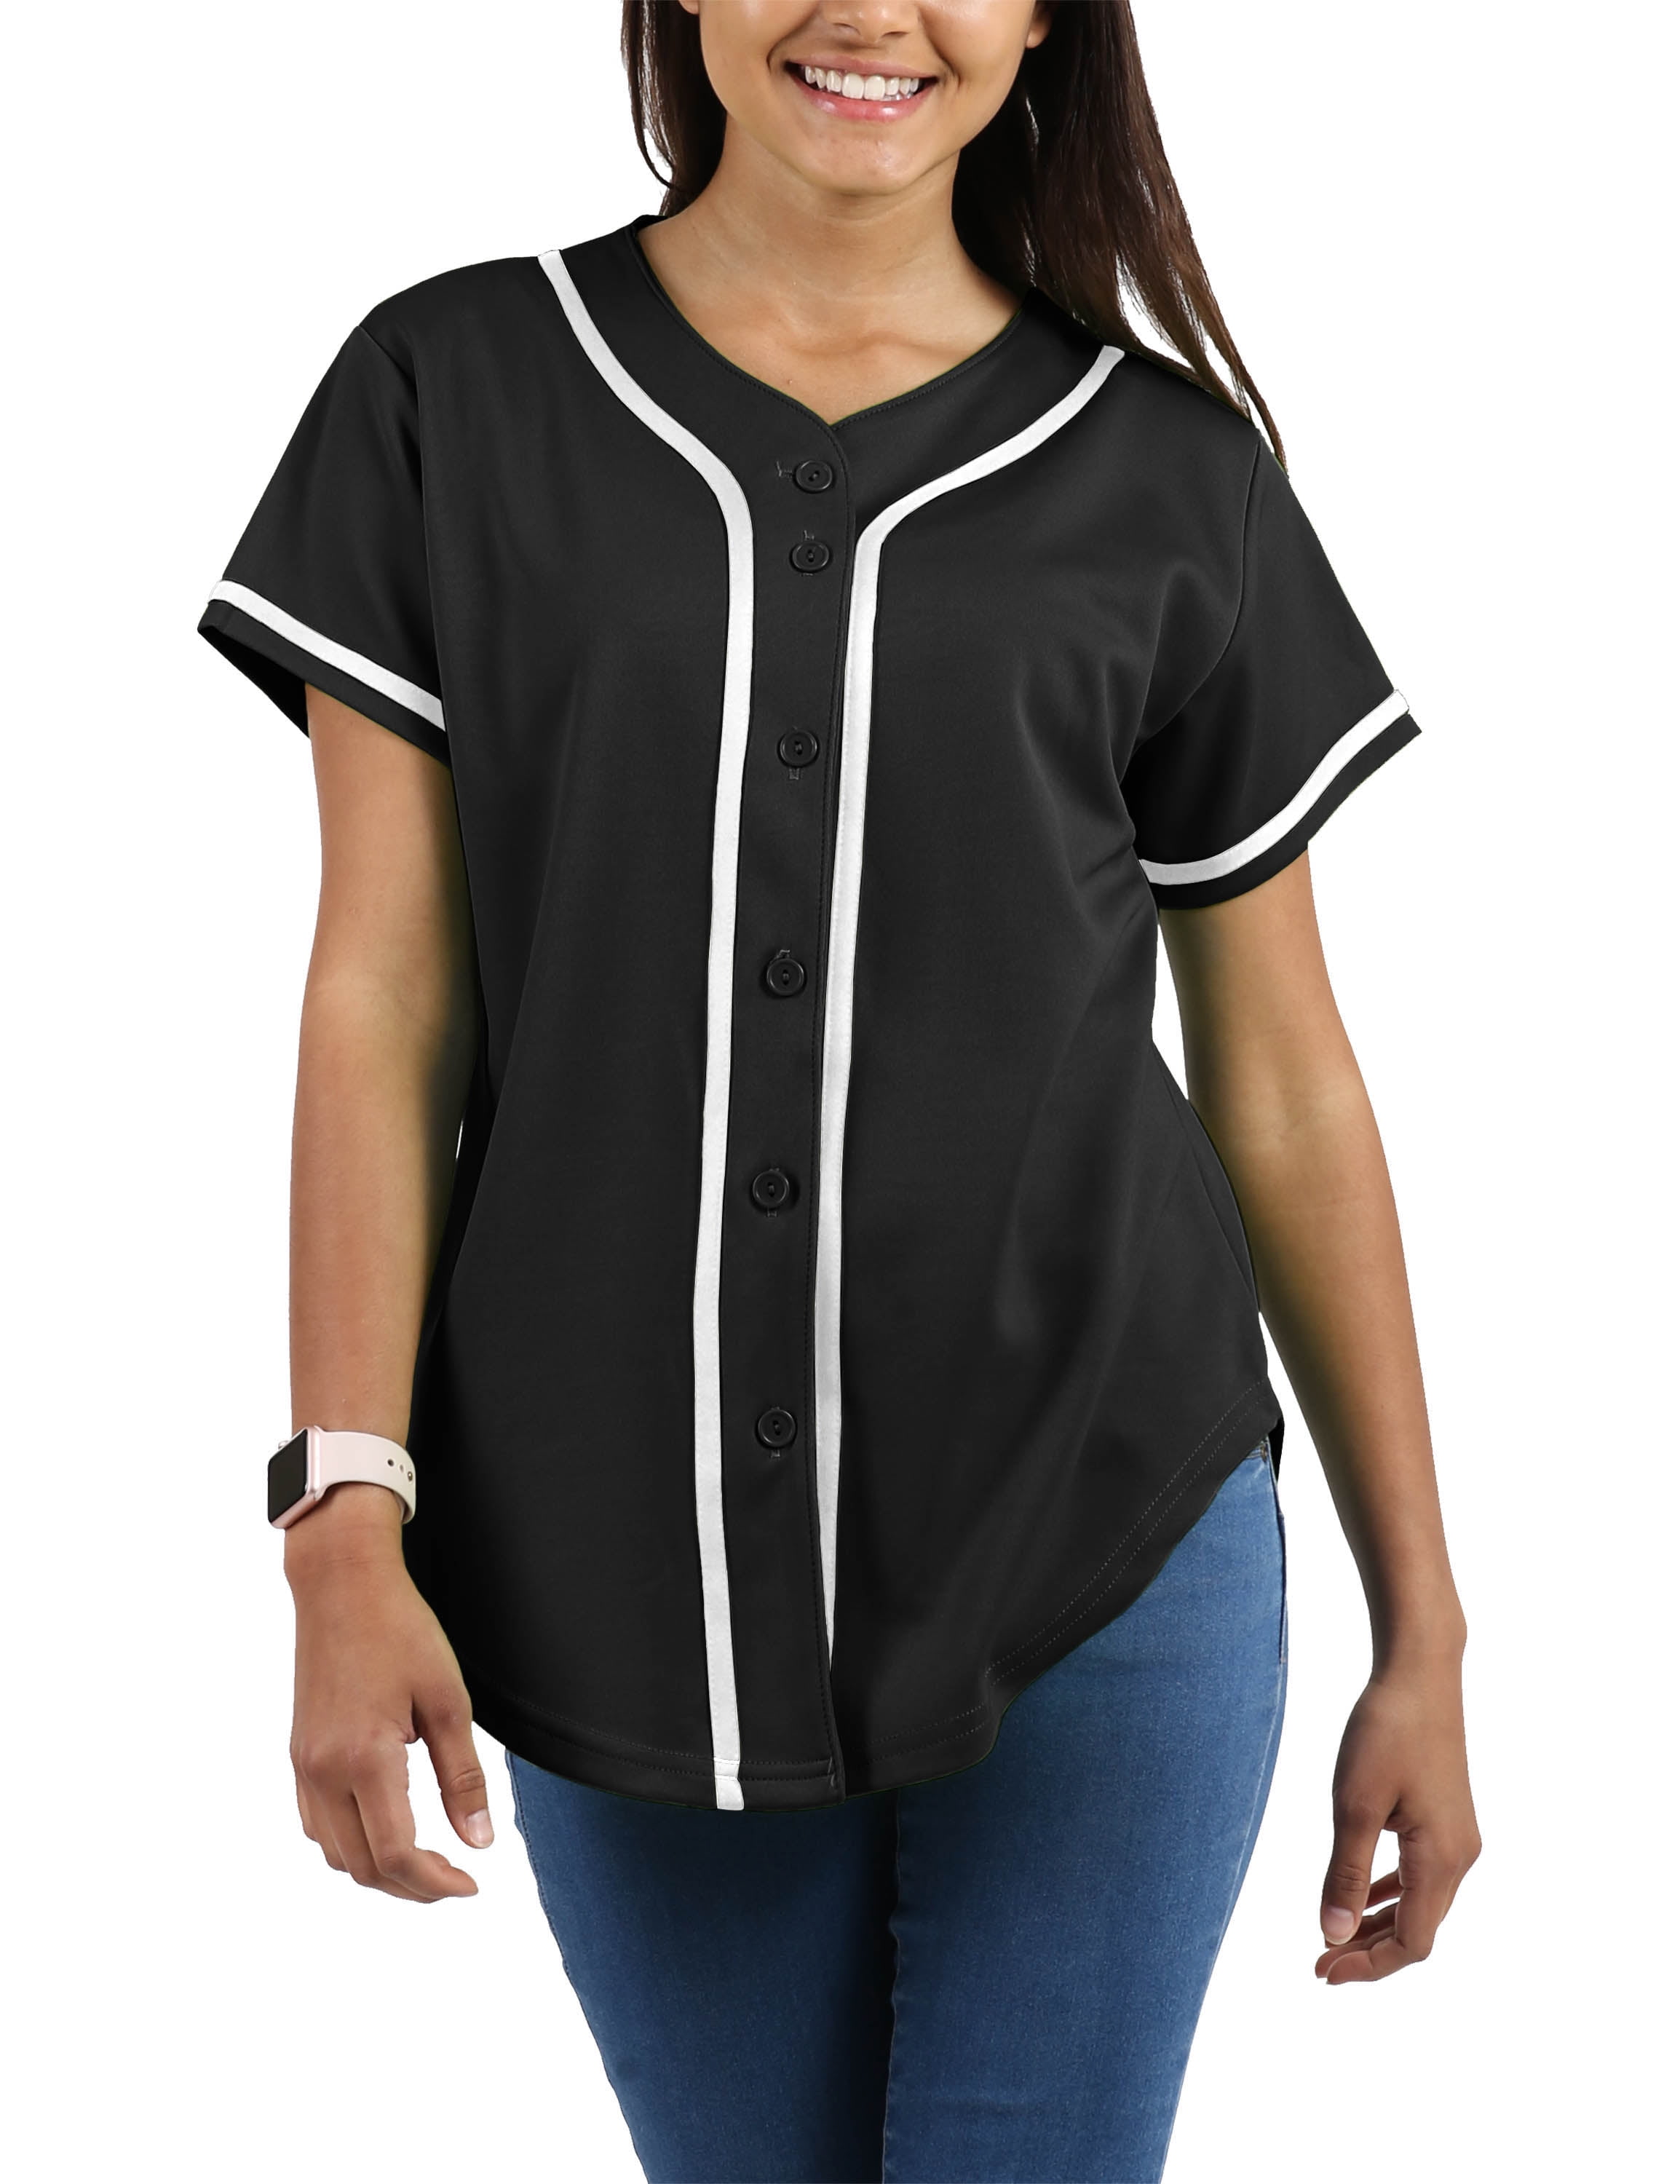 Lkonjsid Women's 90s Dancehall Theme Party Hip Hop Bel Air 23 Baseball Jersey Short Sleeve Shirt for Birthday Party